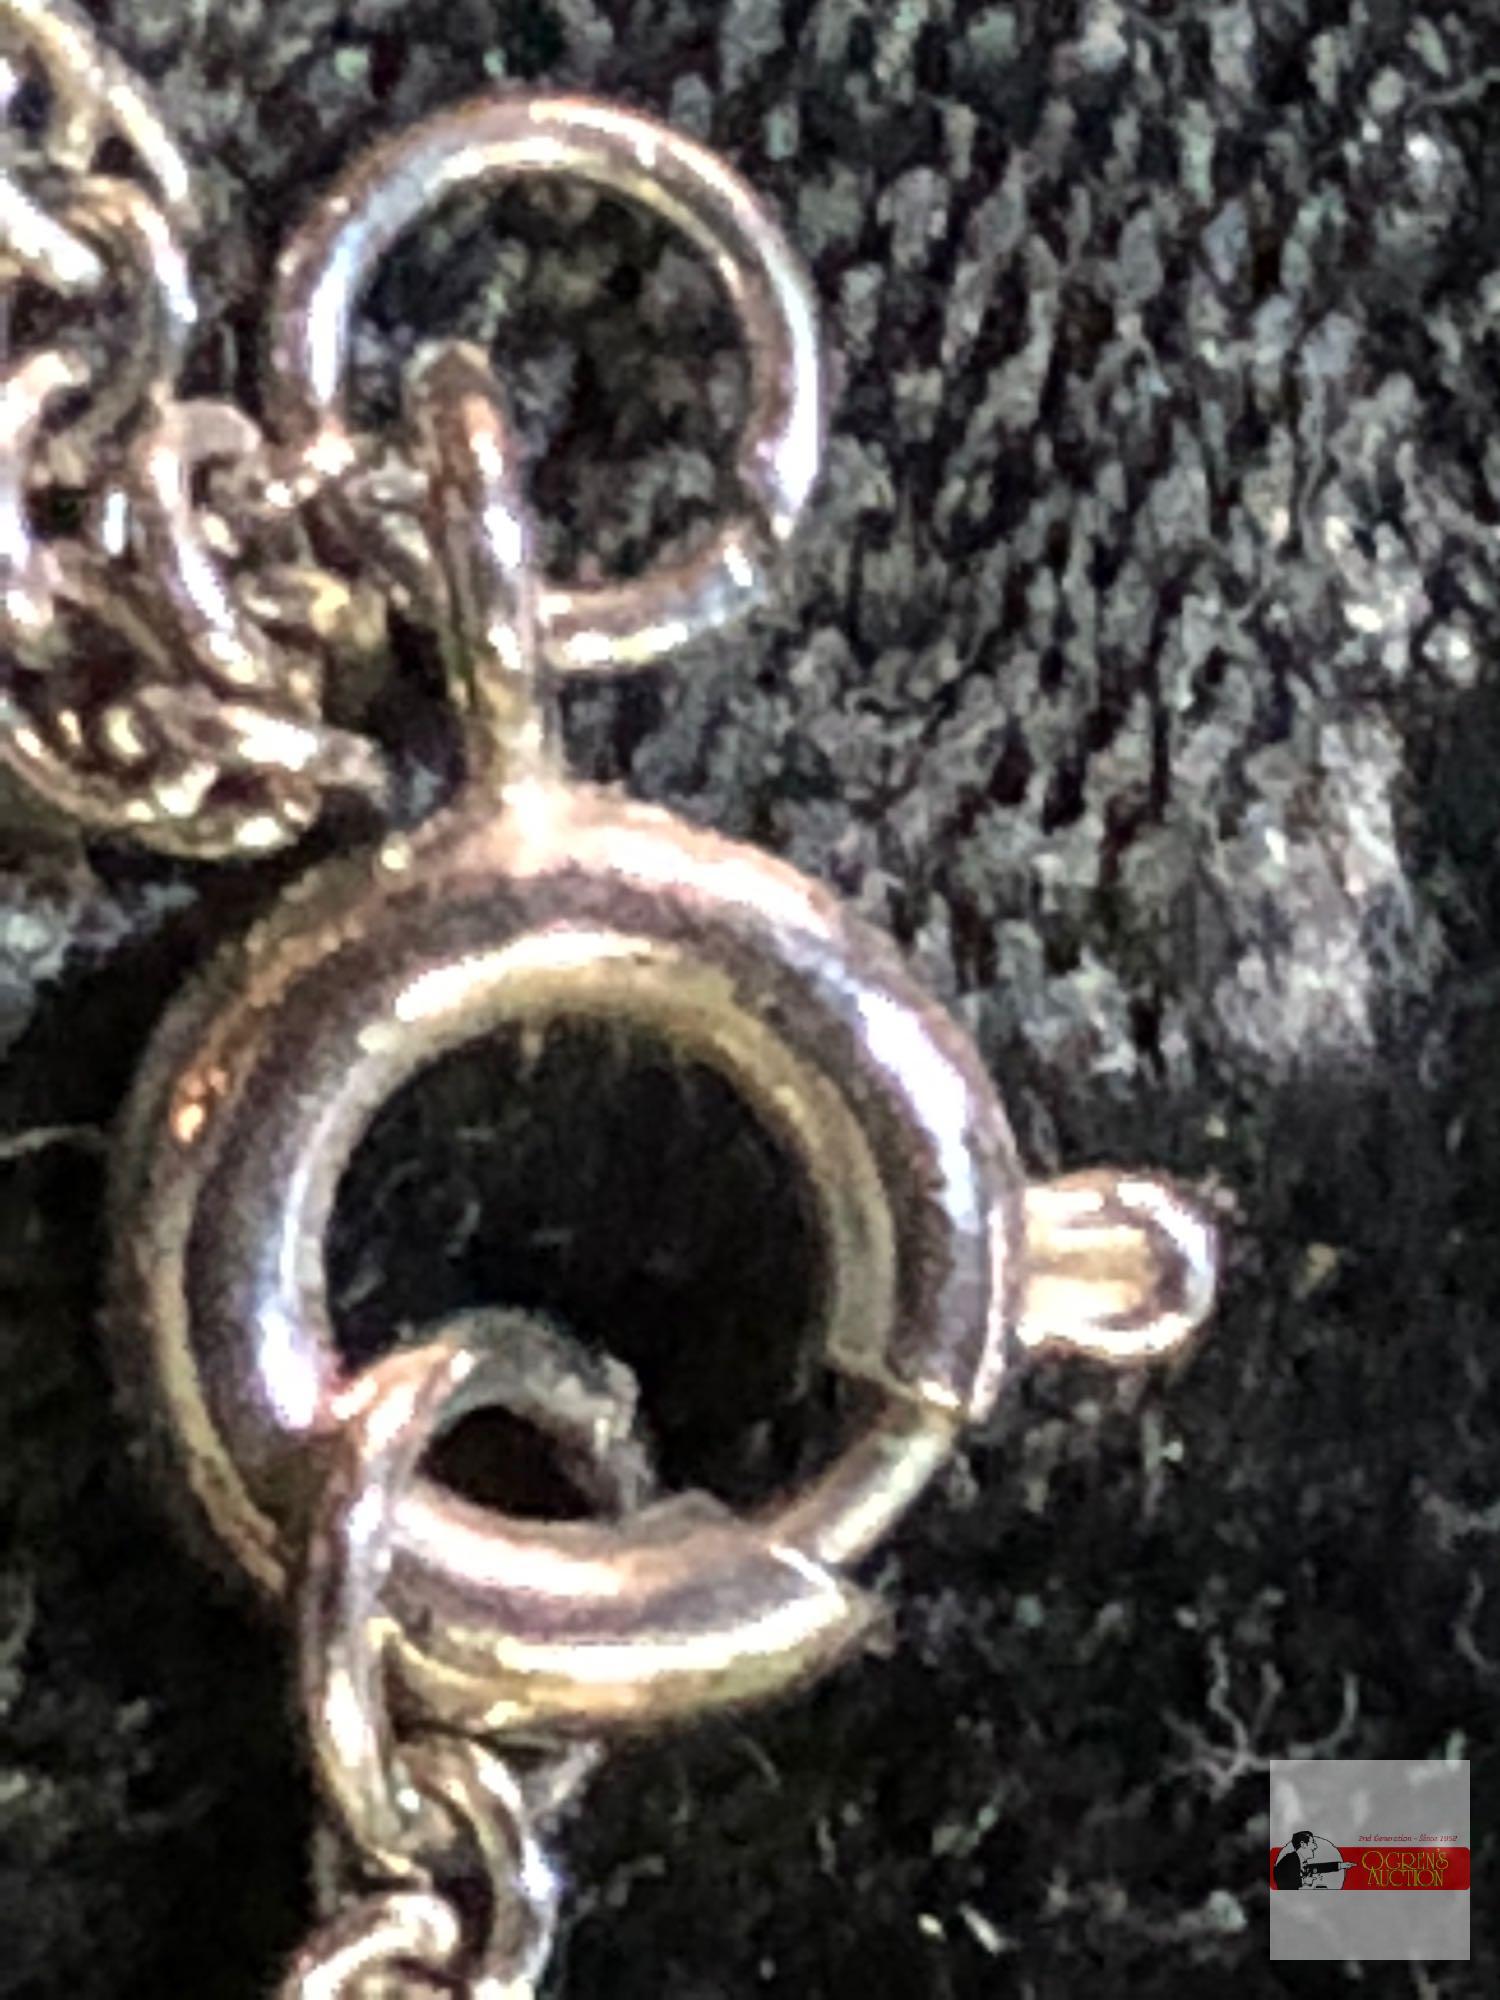 Jewelry - Necklaces, 1 turquoise pendant, I inlaid